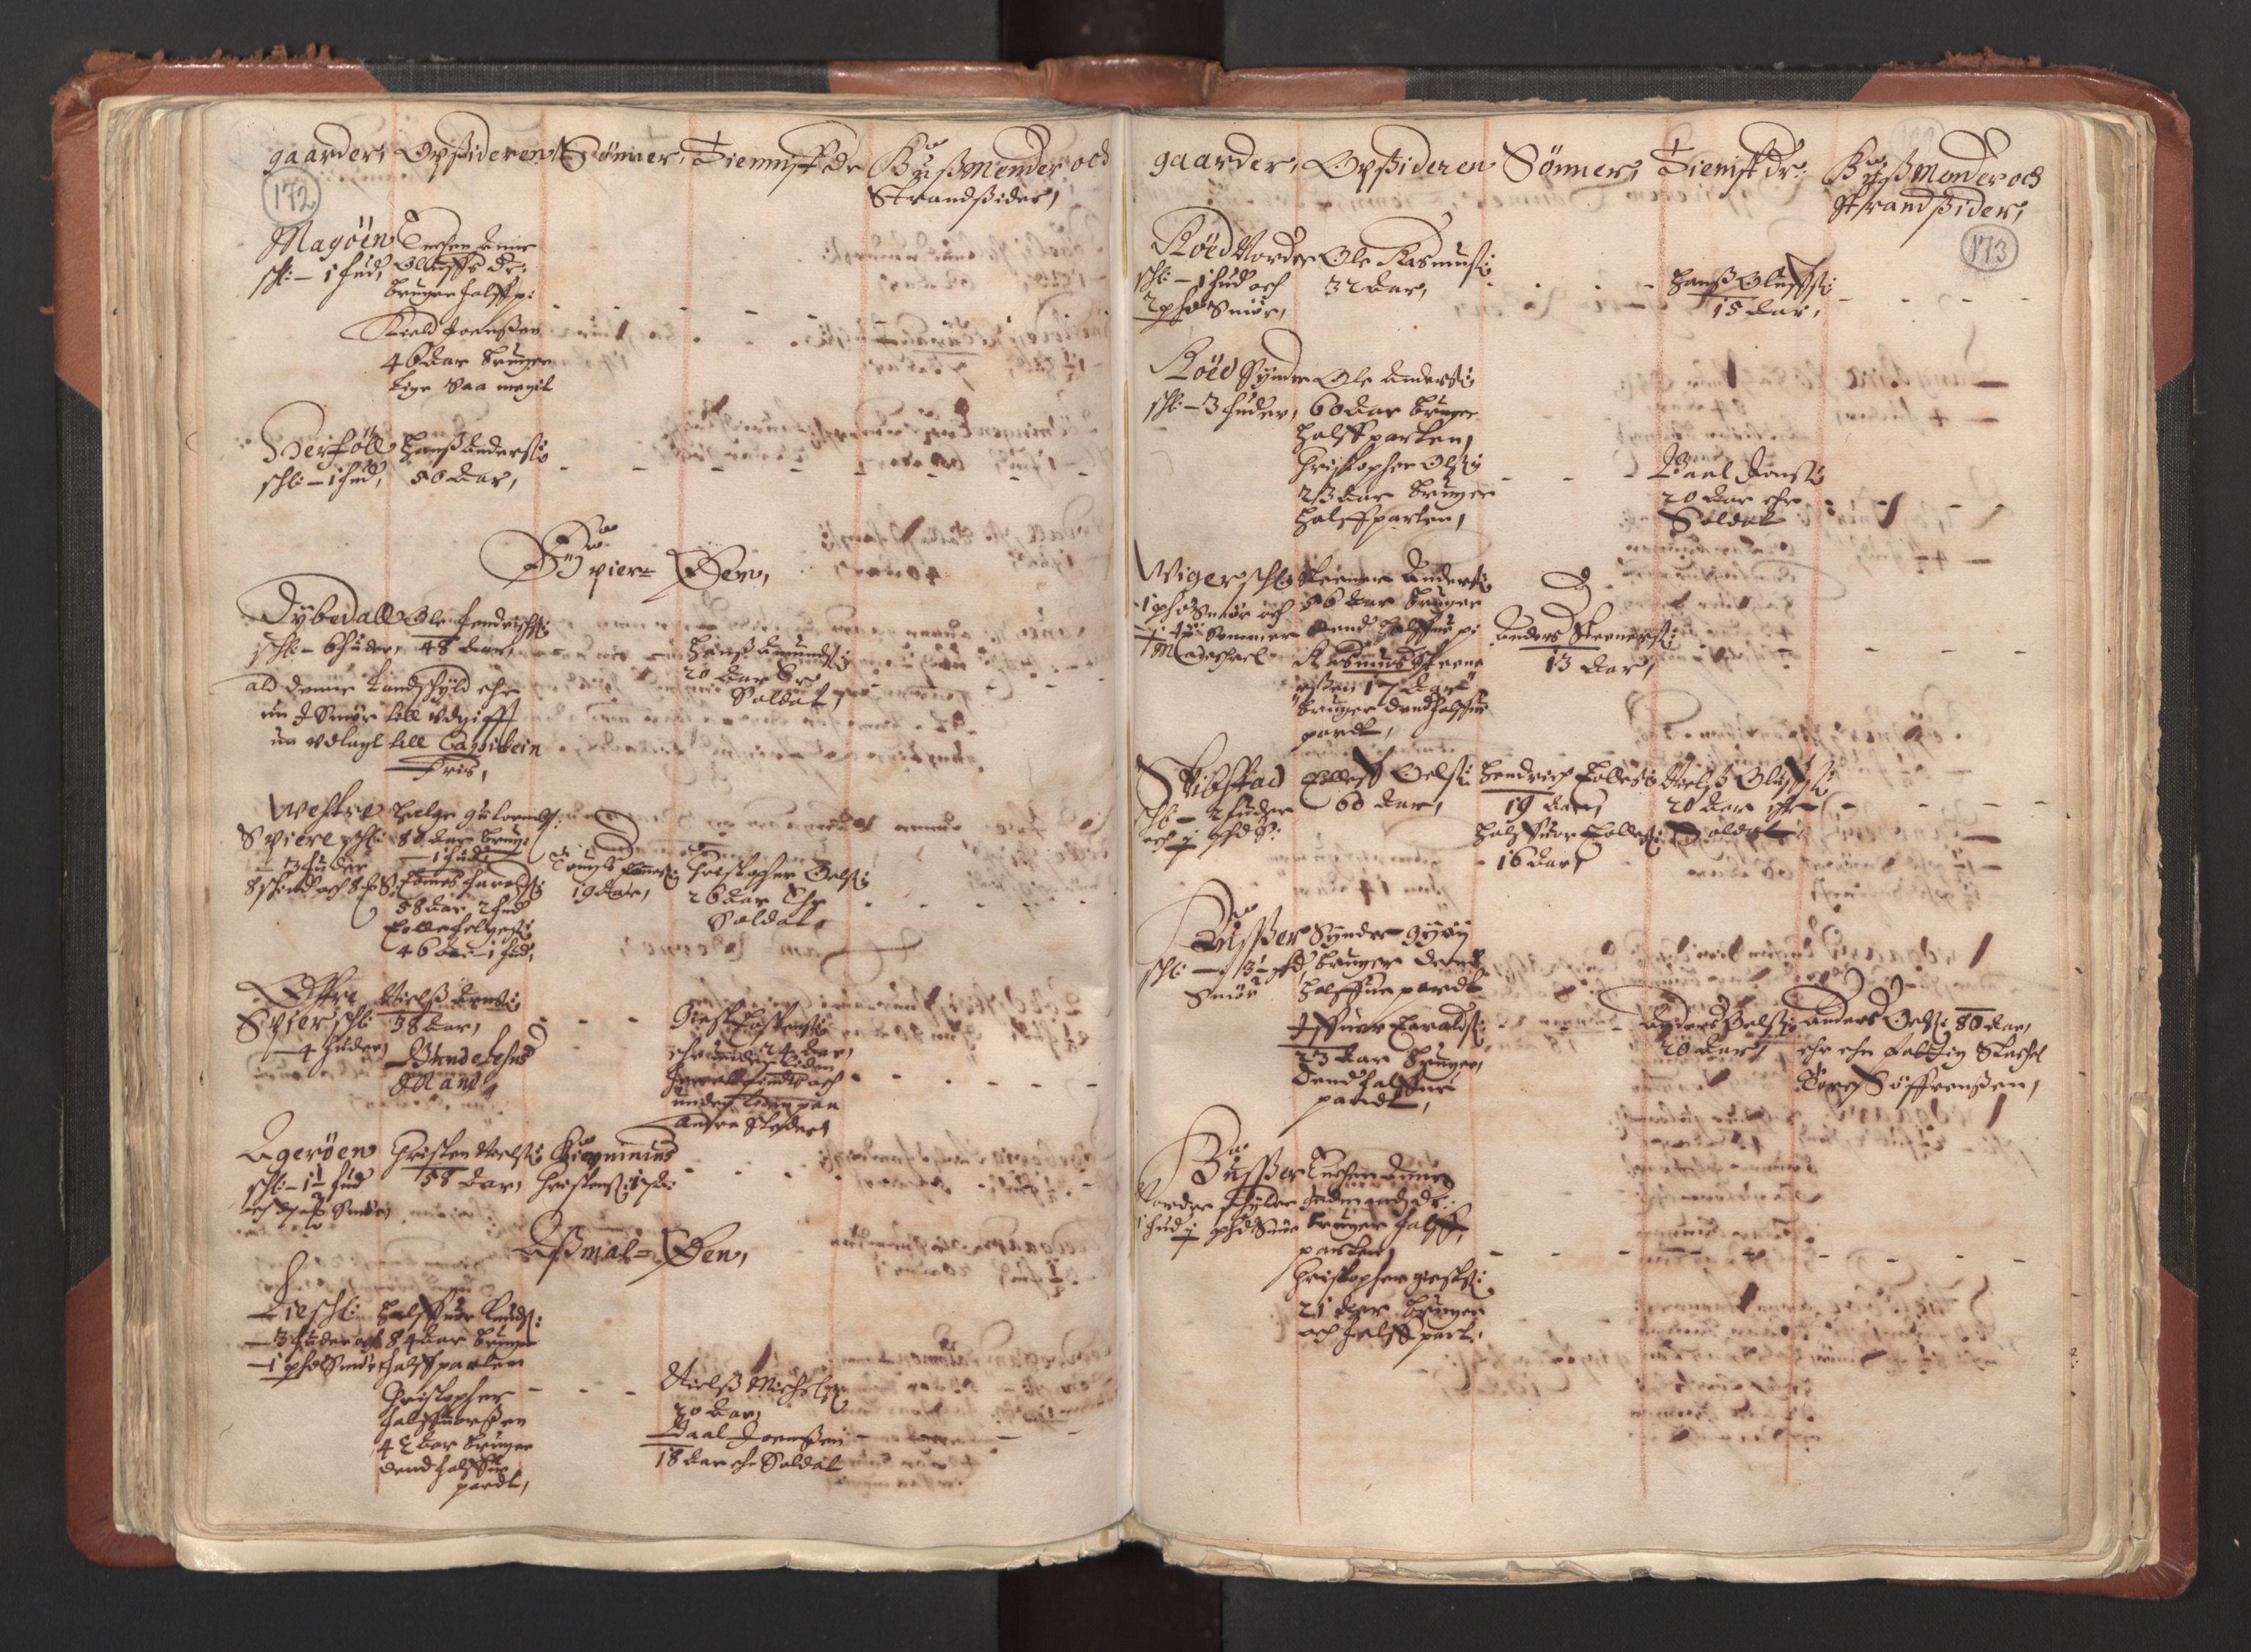 RA, Fogdenes og sorenskrivernes manntall 1664-1666, nr. 1: Fogderier (len og skipreider) i nåværende Østfold fylke, 1664, s. 172-173